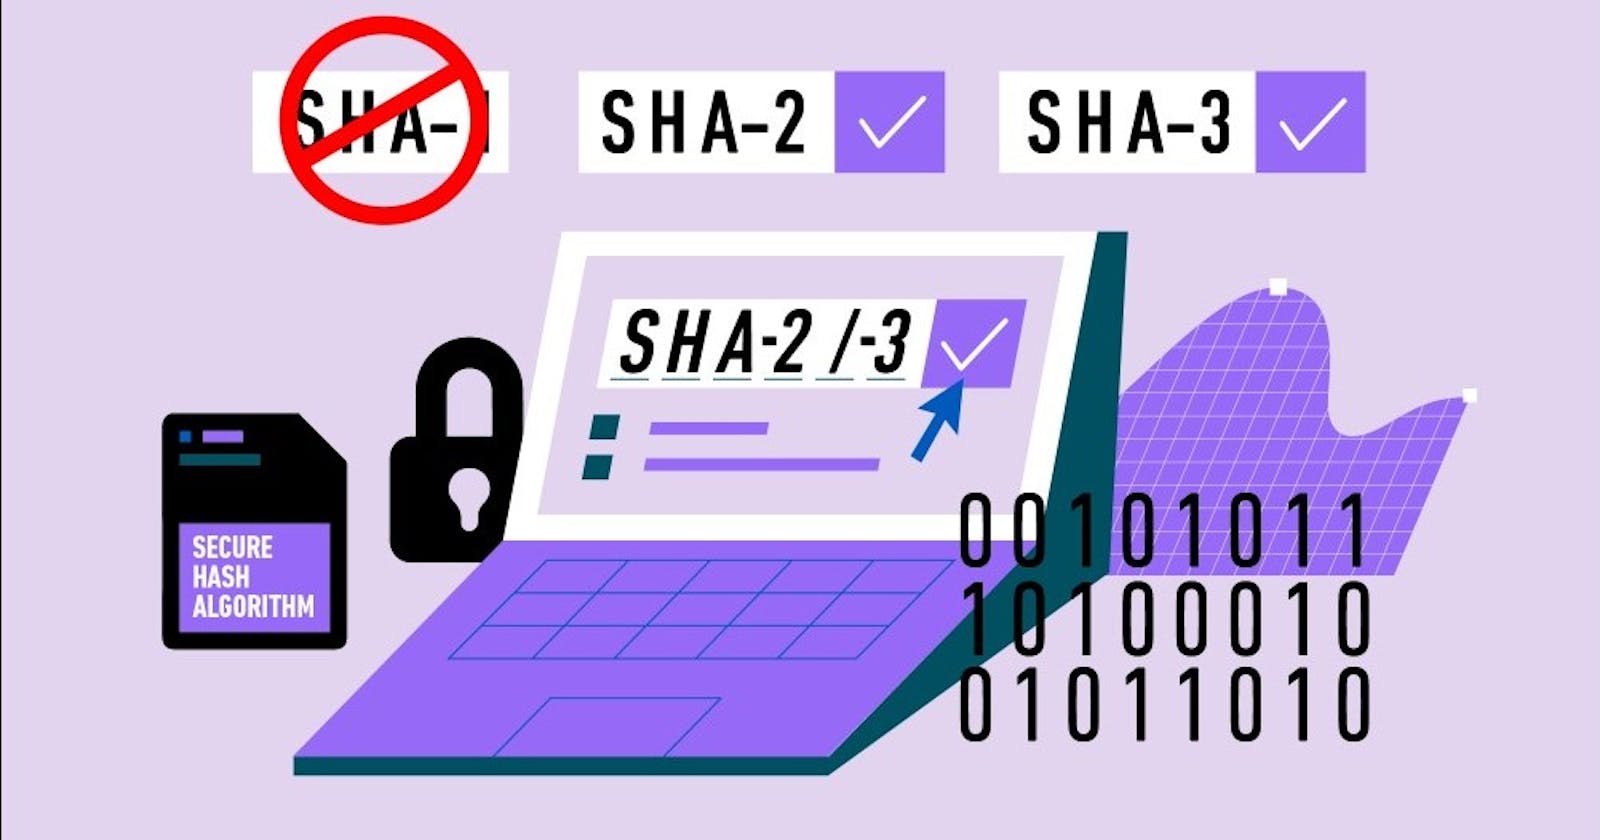 NIST retires SHA-1 cryptographic algorithm